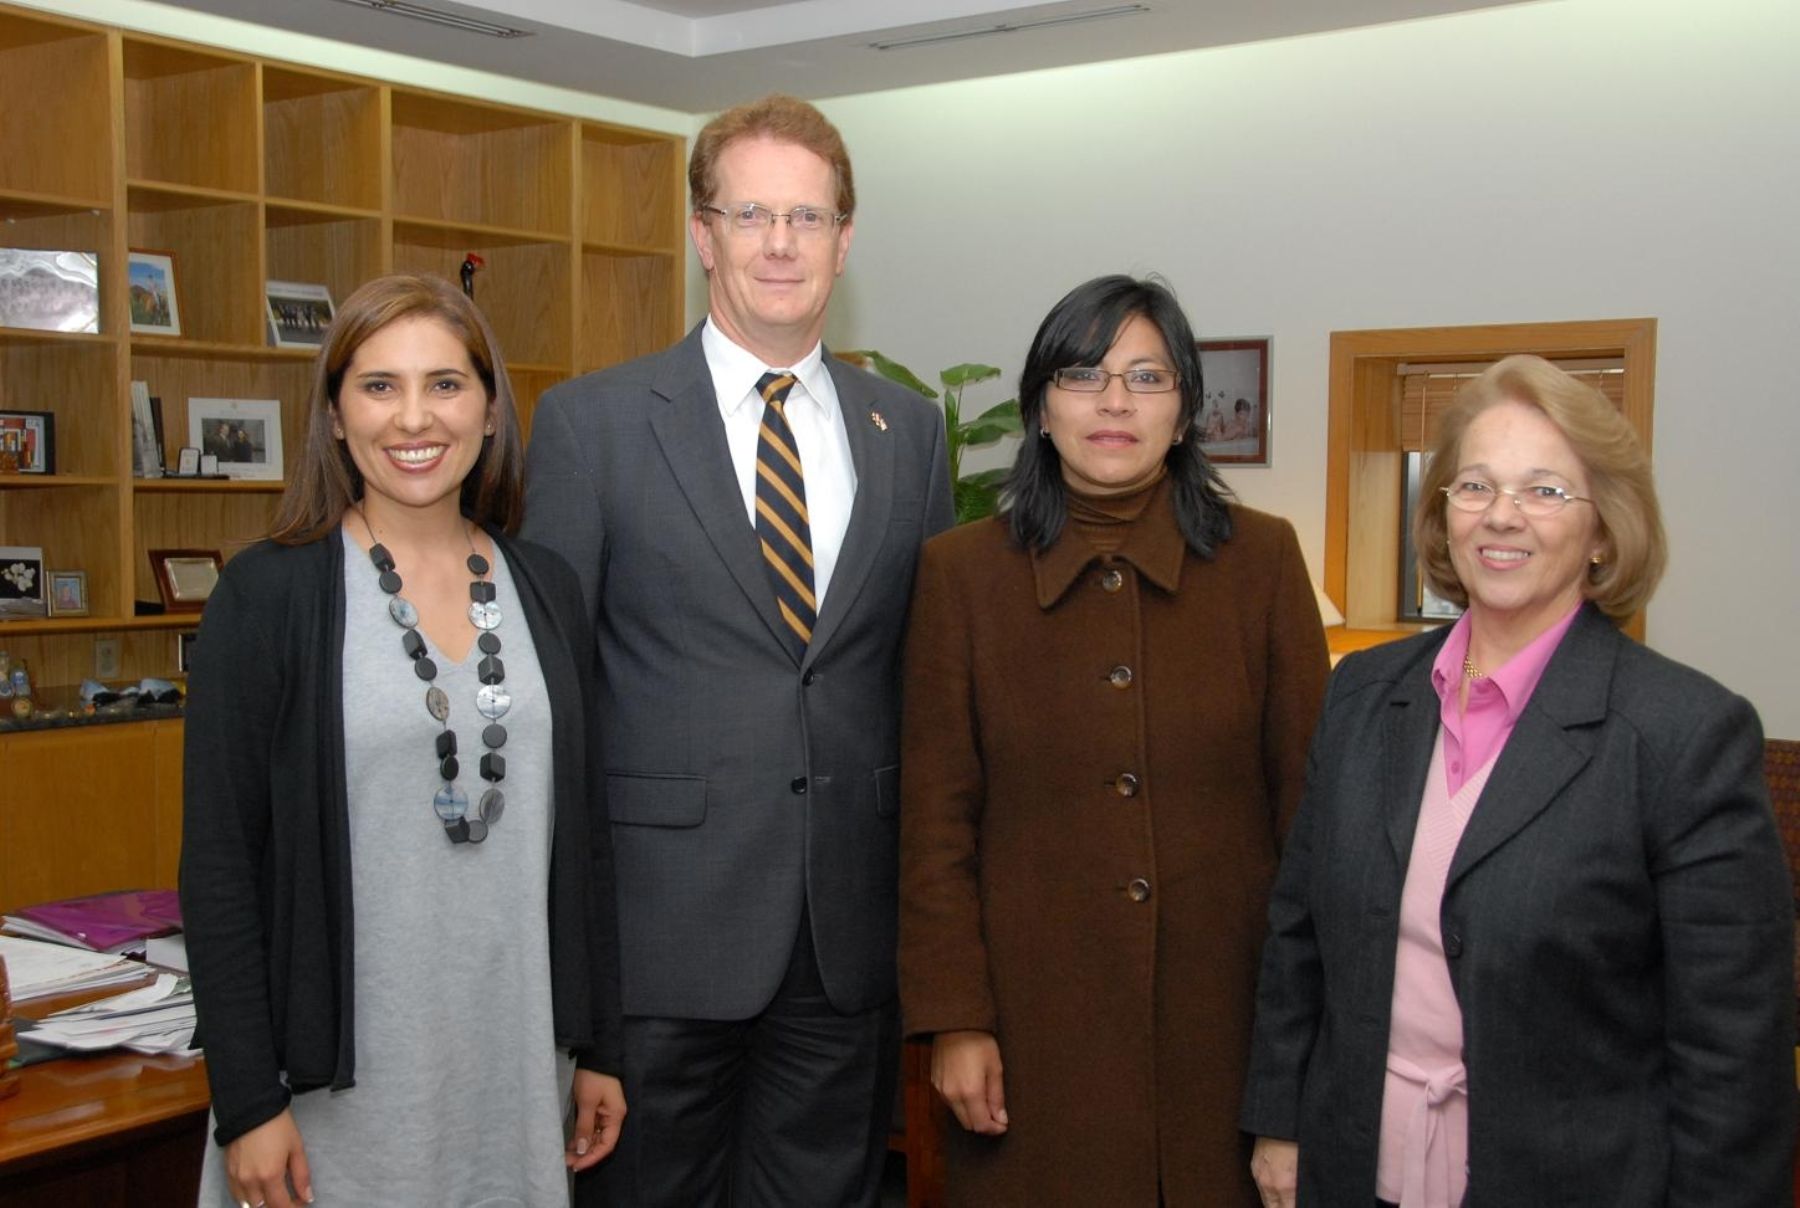 Mujeres empresarias peruanas participaron becadas en proyecto estadounidense. Foto: Andina/Difusión